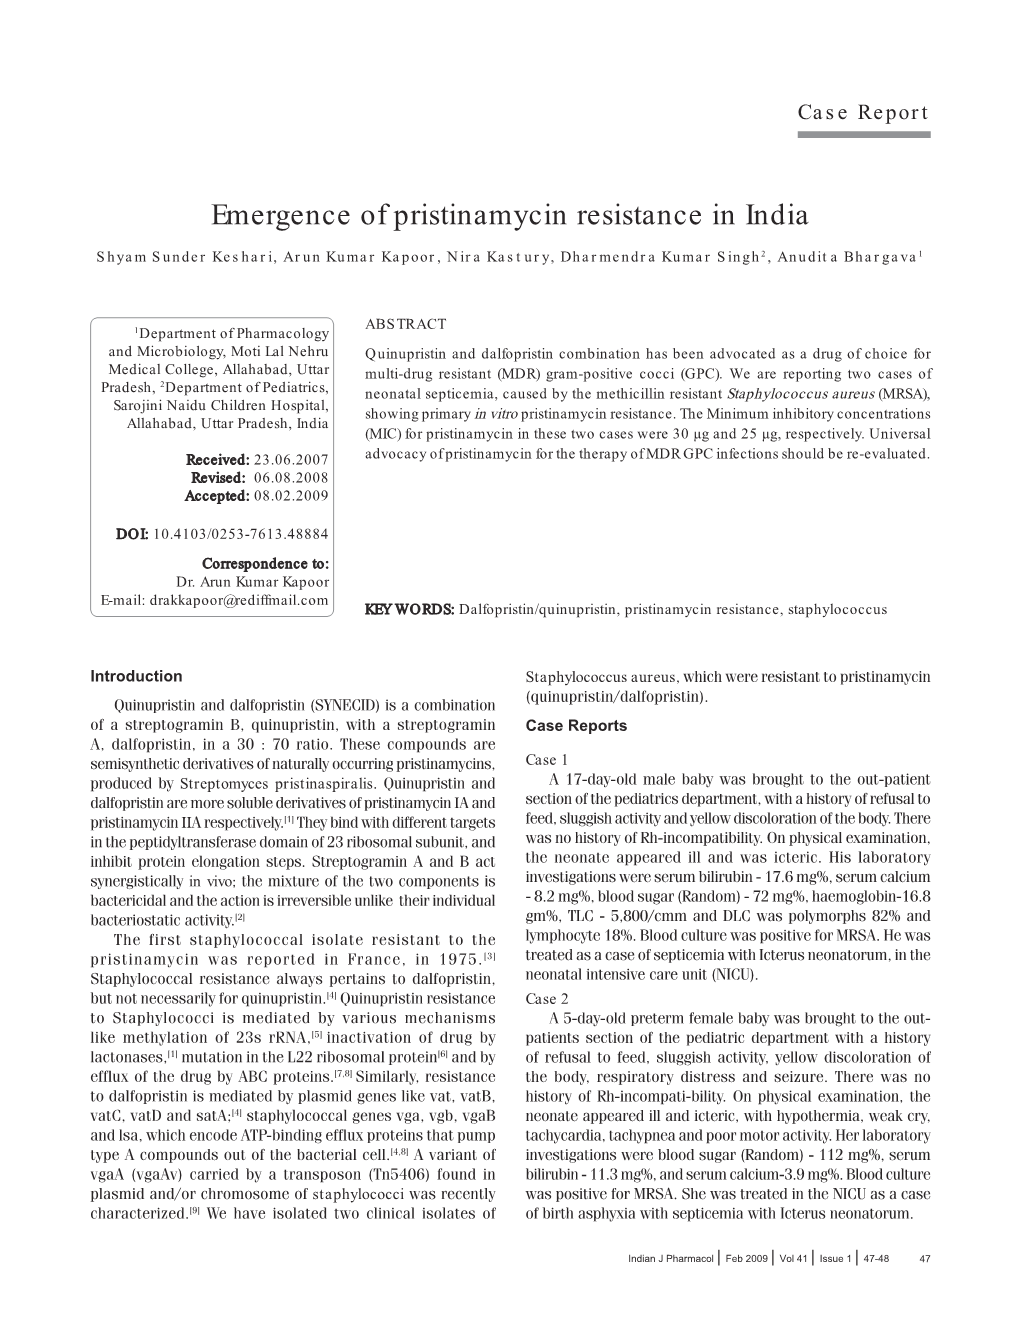 Emergence of Pristinamycin Resistance in India Shyam Sunder Keshari, Arun Kumar Kapoor, Nira Kastury, Dharmendra Kumar Singh2, Anudita Bhargava1